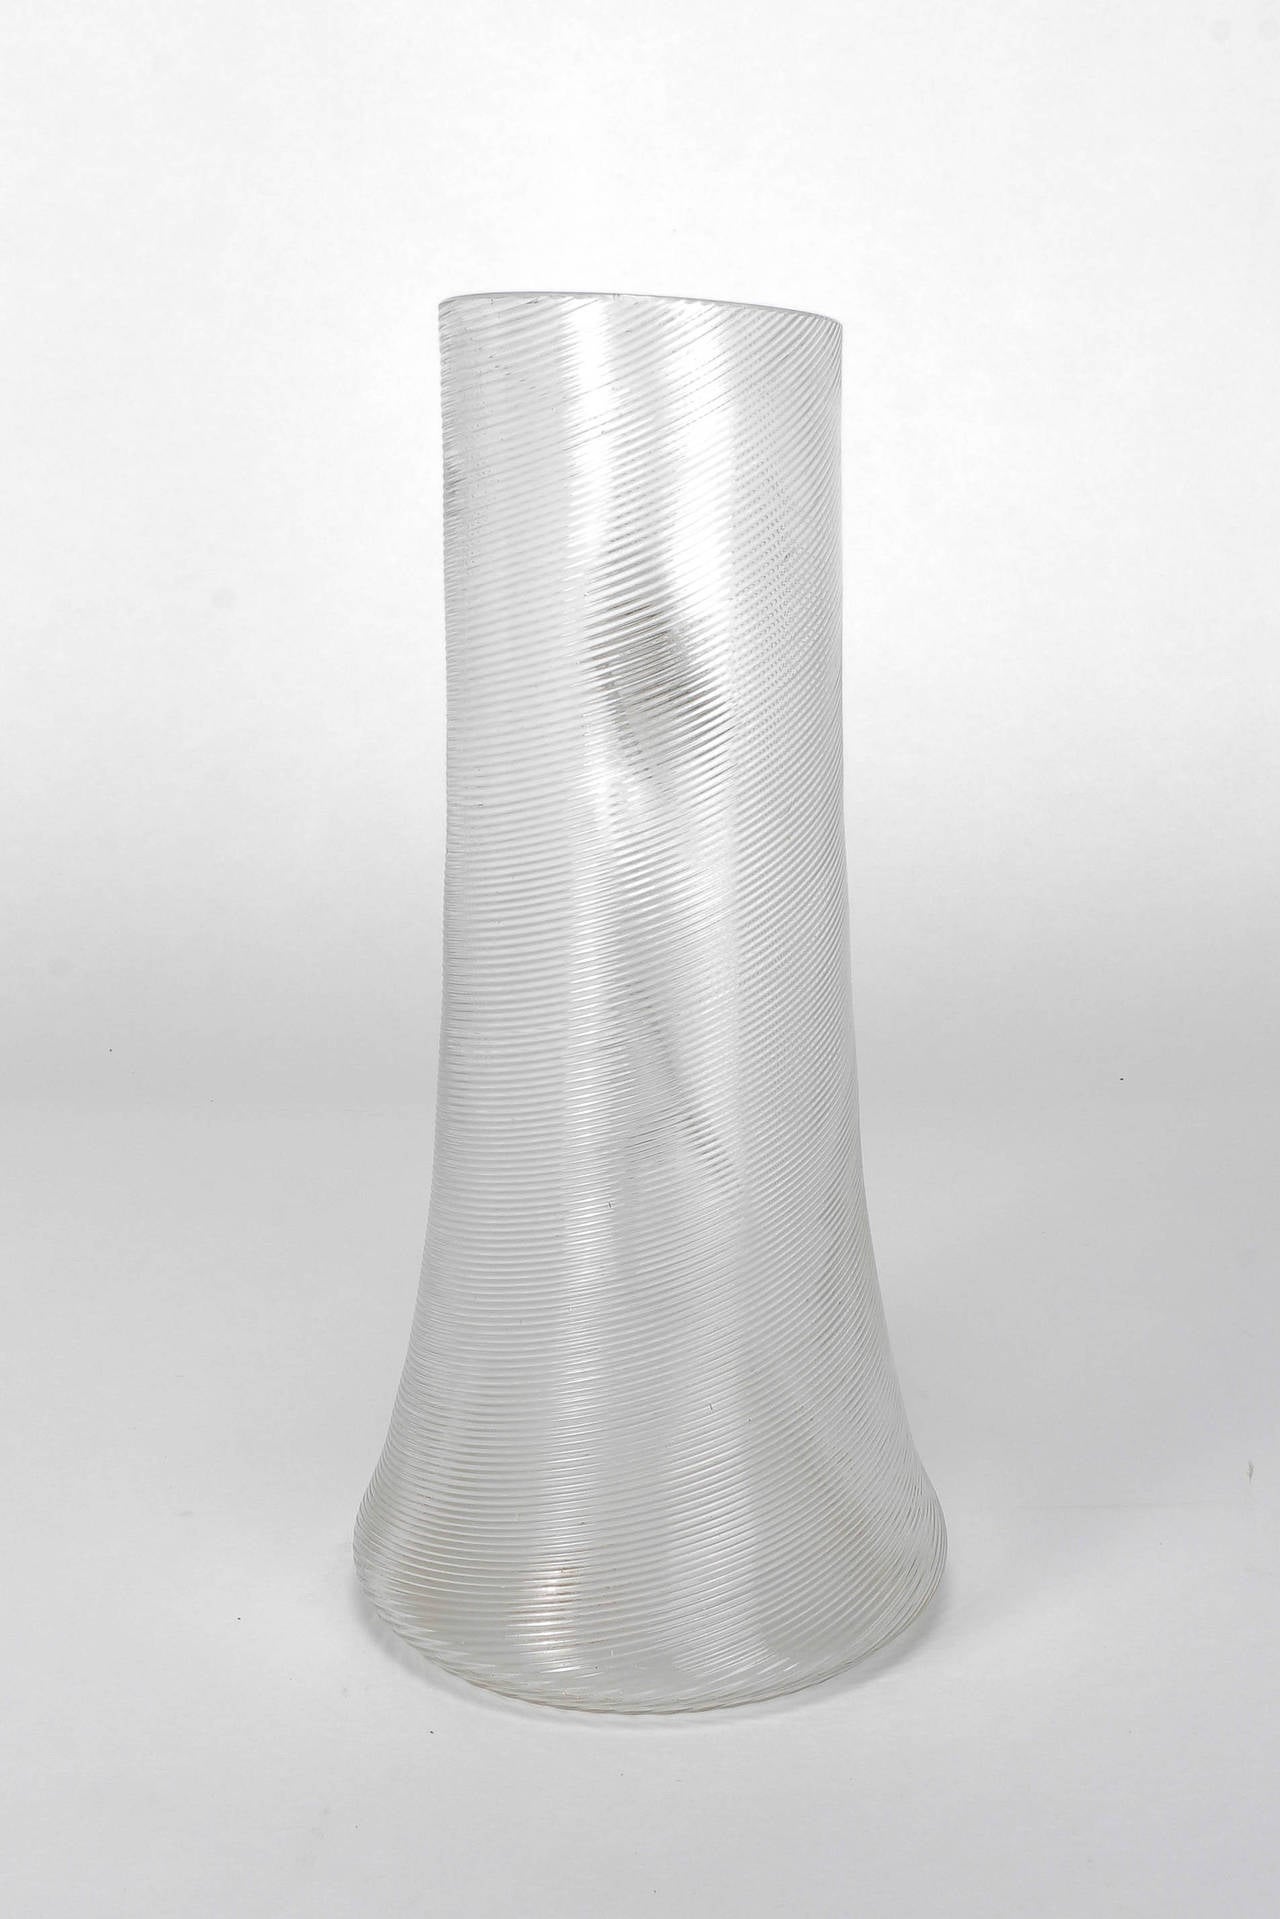 Mid-Century Modern Italian Venini Filigrana Glass Decanter Jar, 1930s For Sale